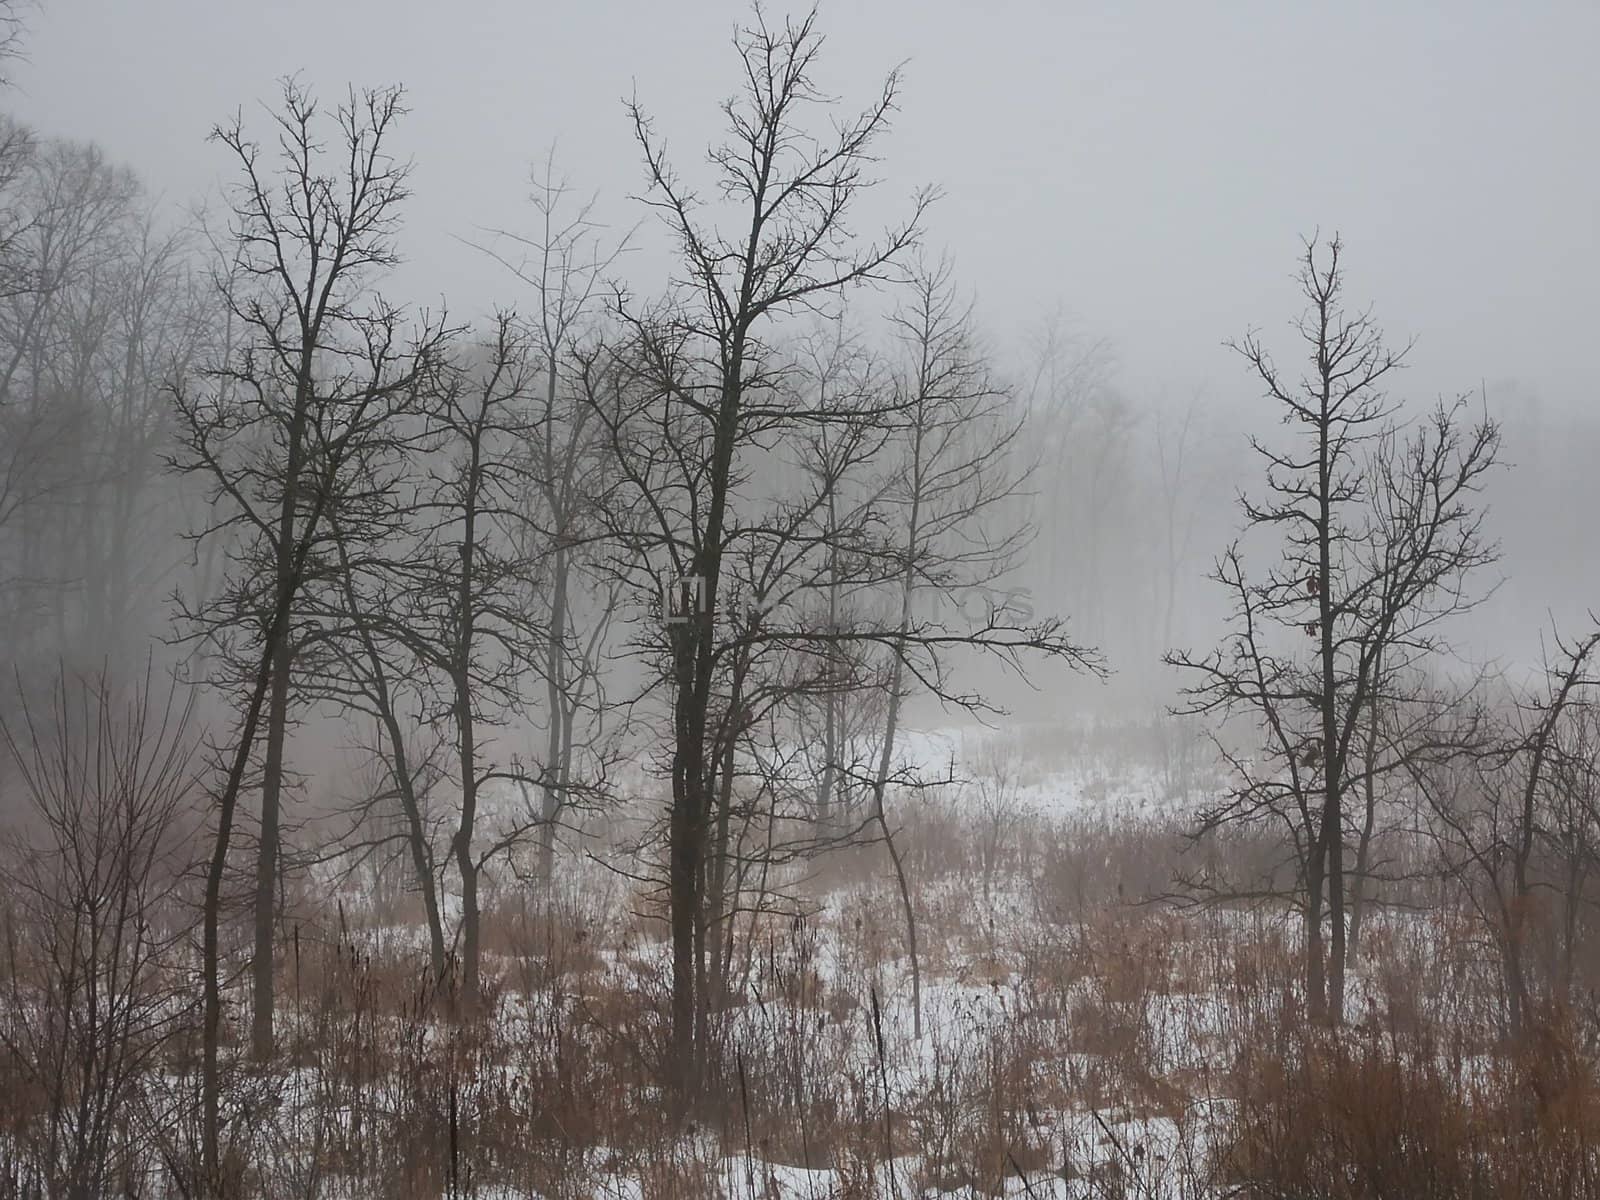 Fog creates an eerie scene at a prairie in northern Illinois.